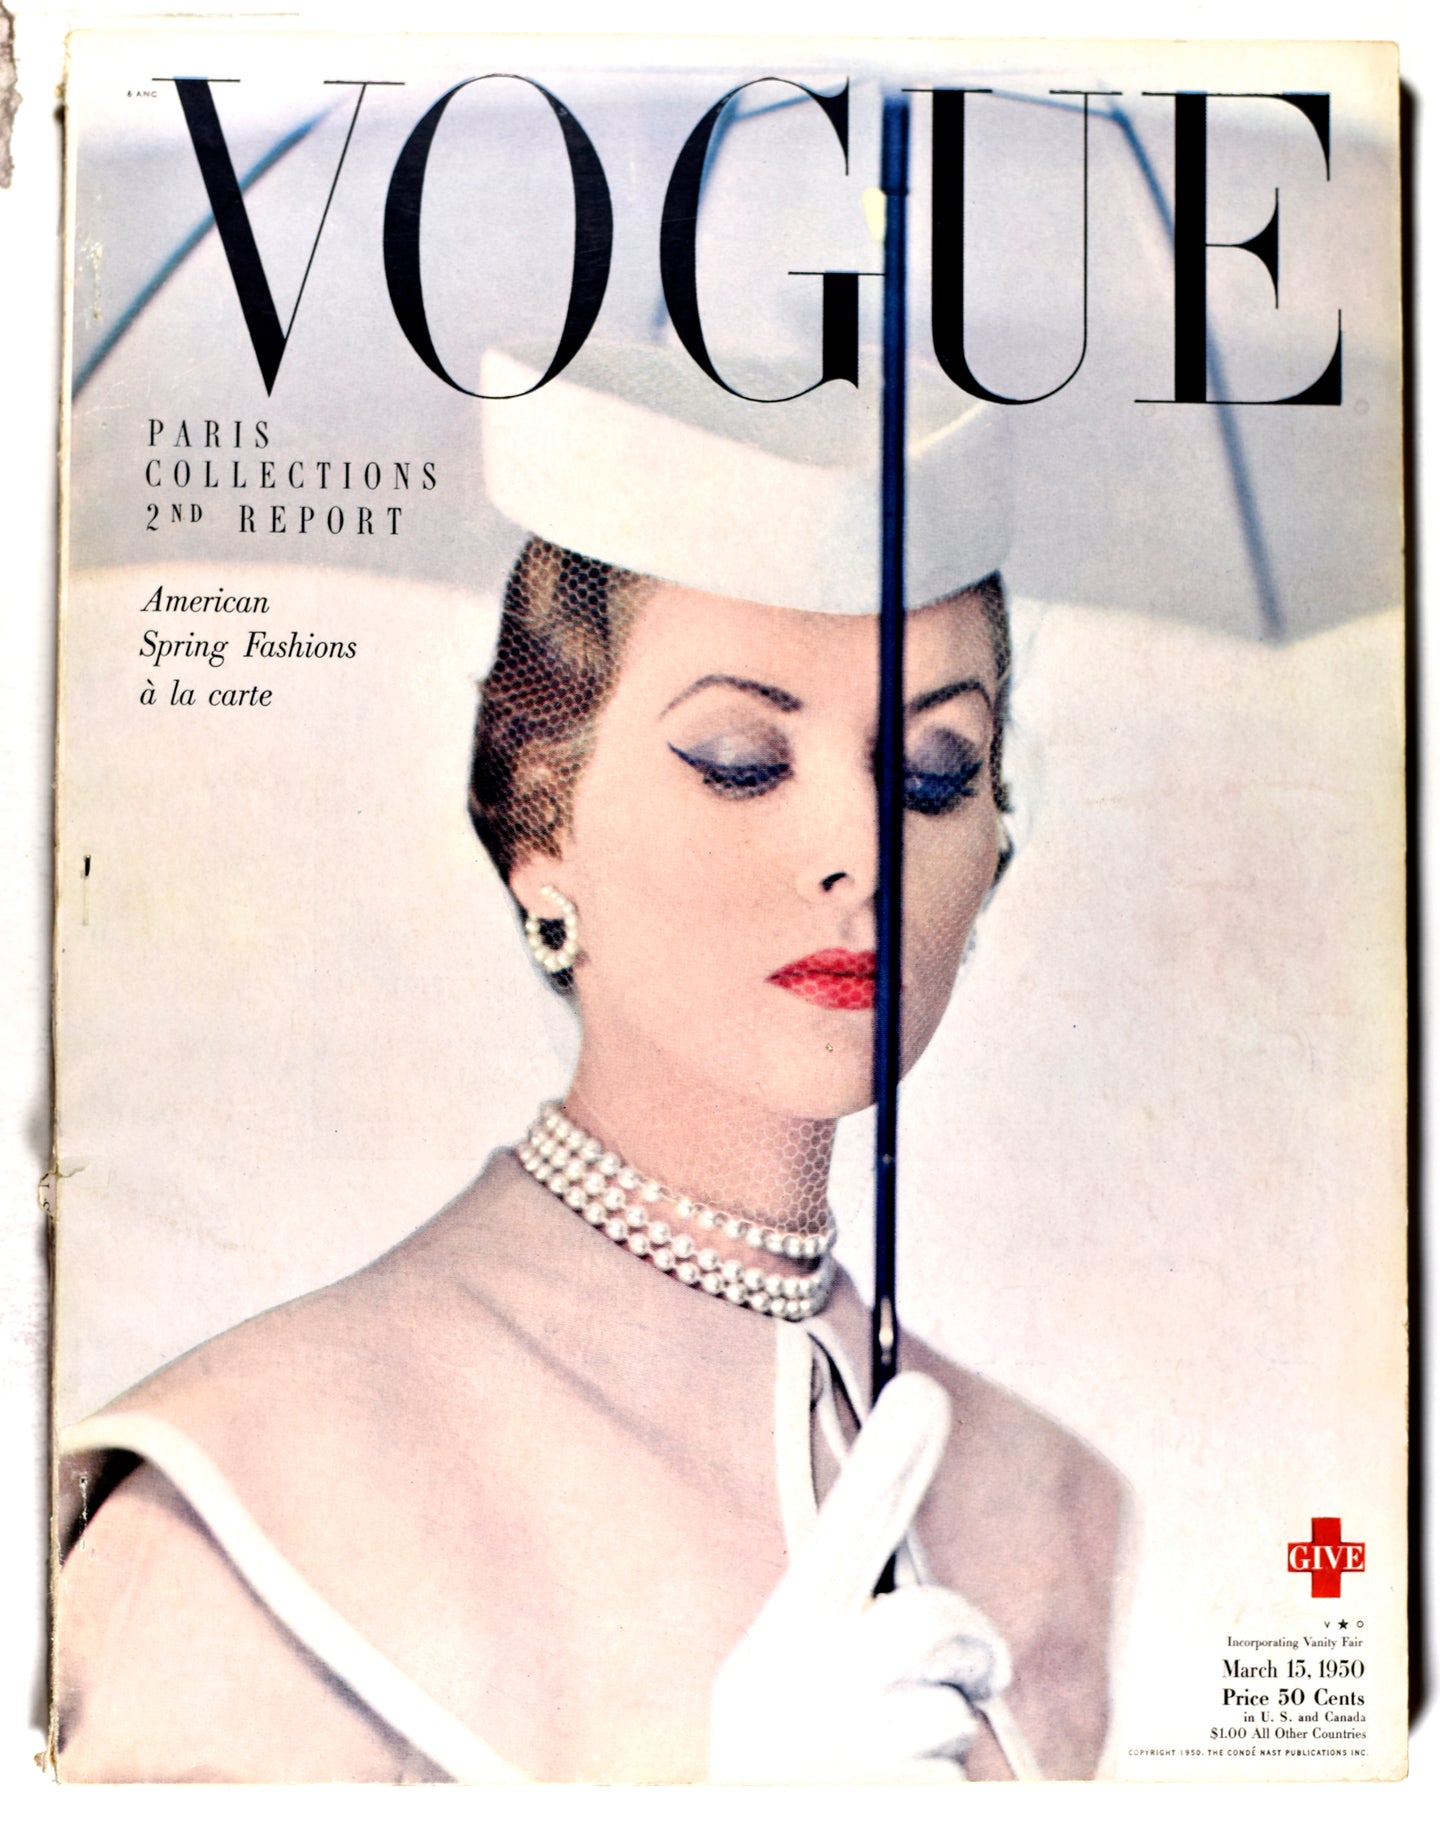 Vogue [1950/03/15]